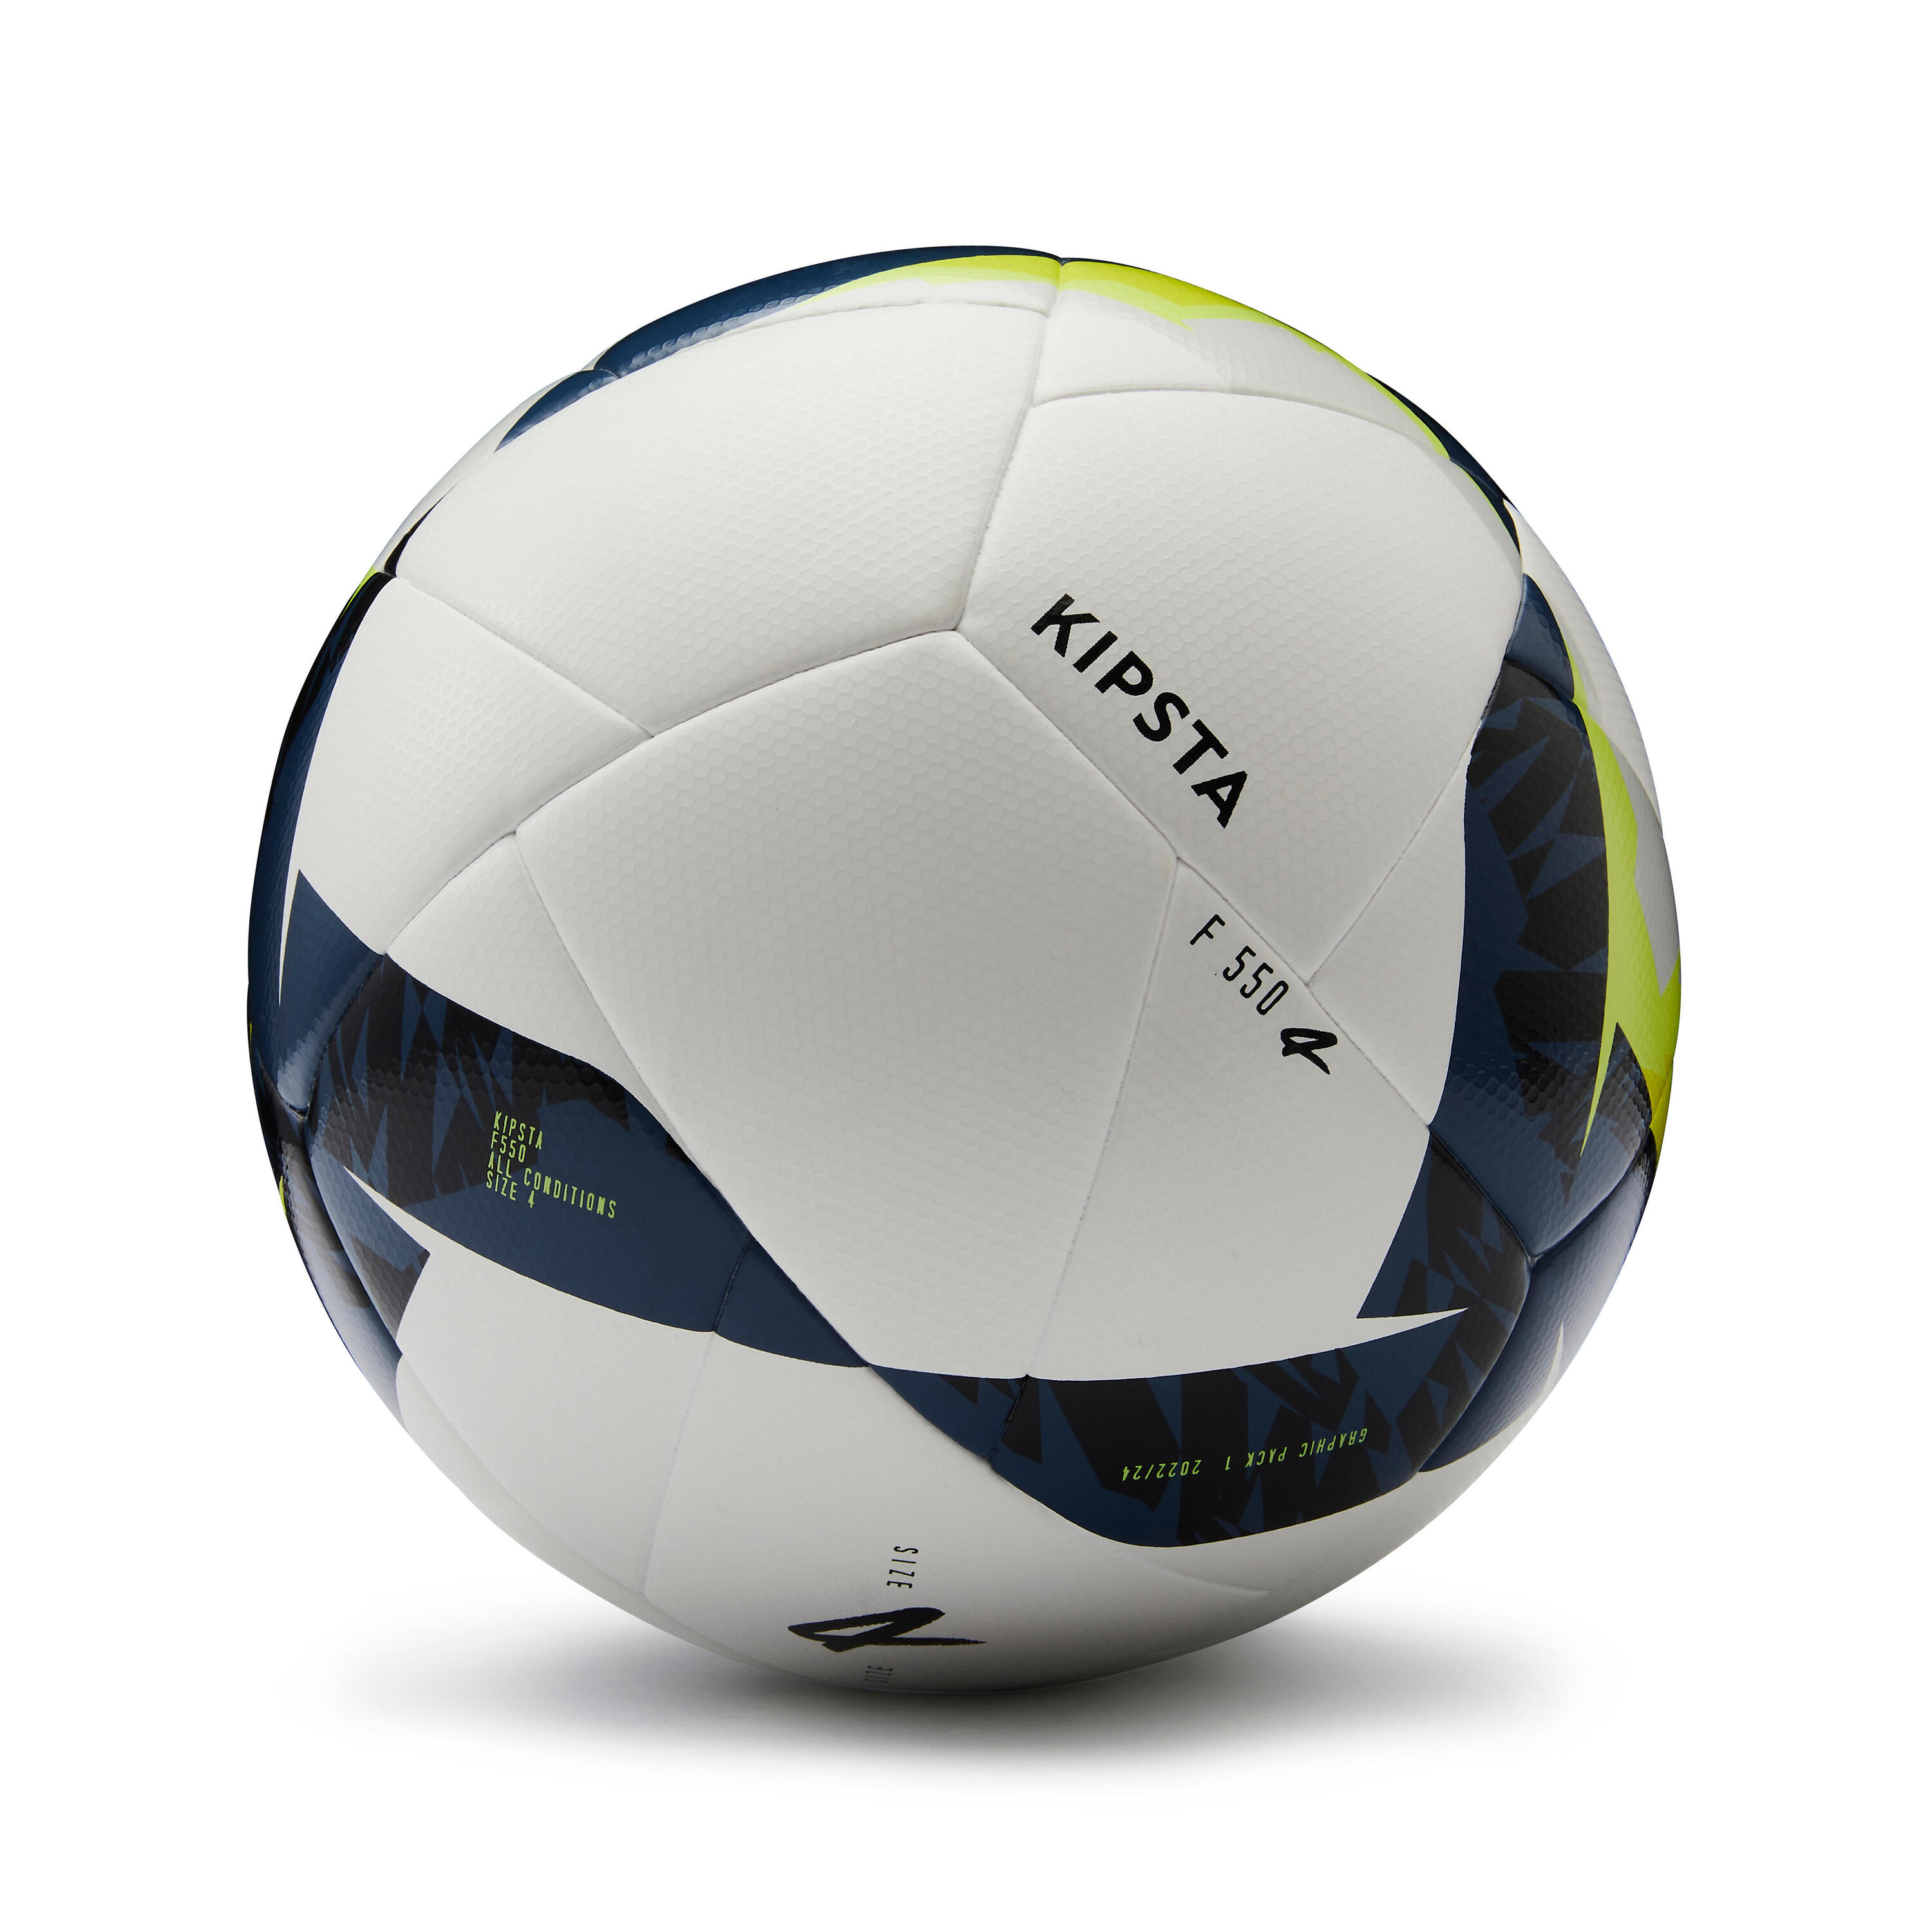 Hybrid Football FIFA Basic F550 Size 4 - White/Yellow 7/7